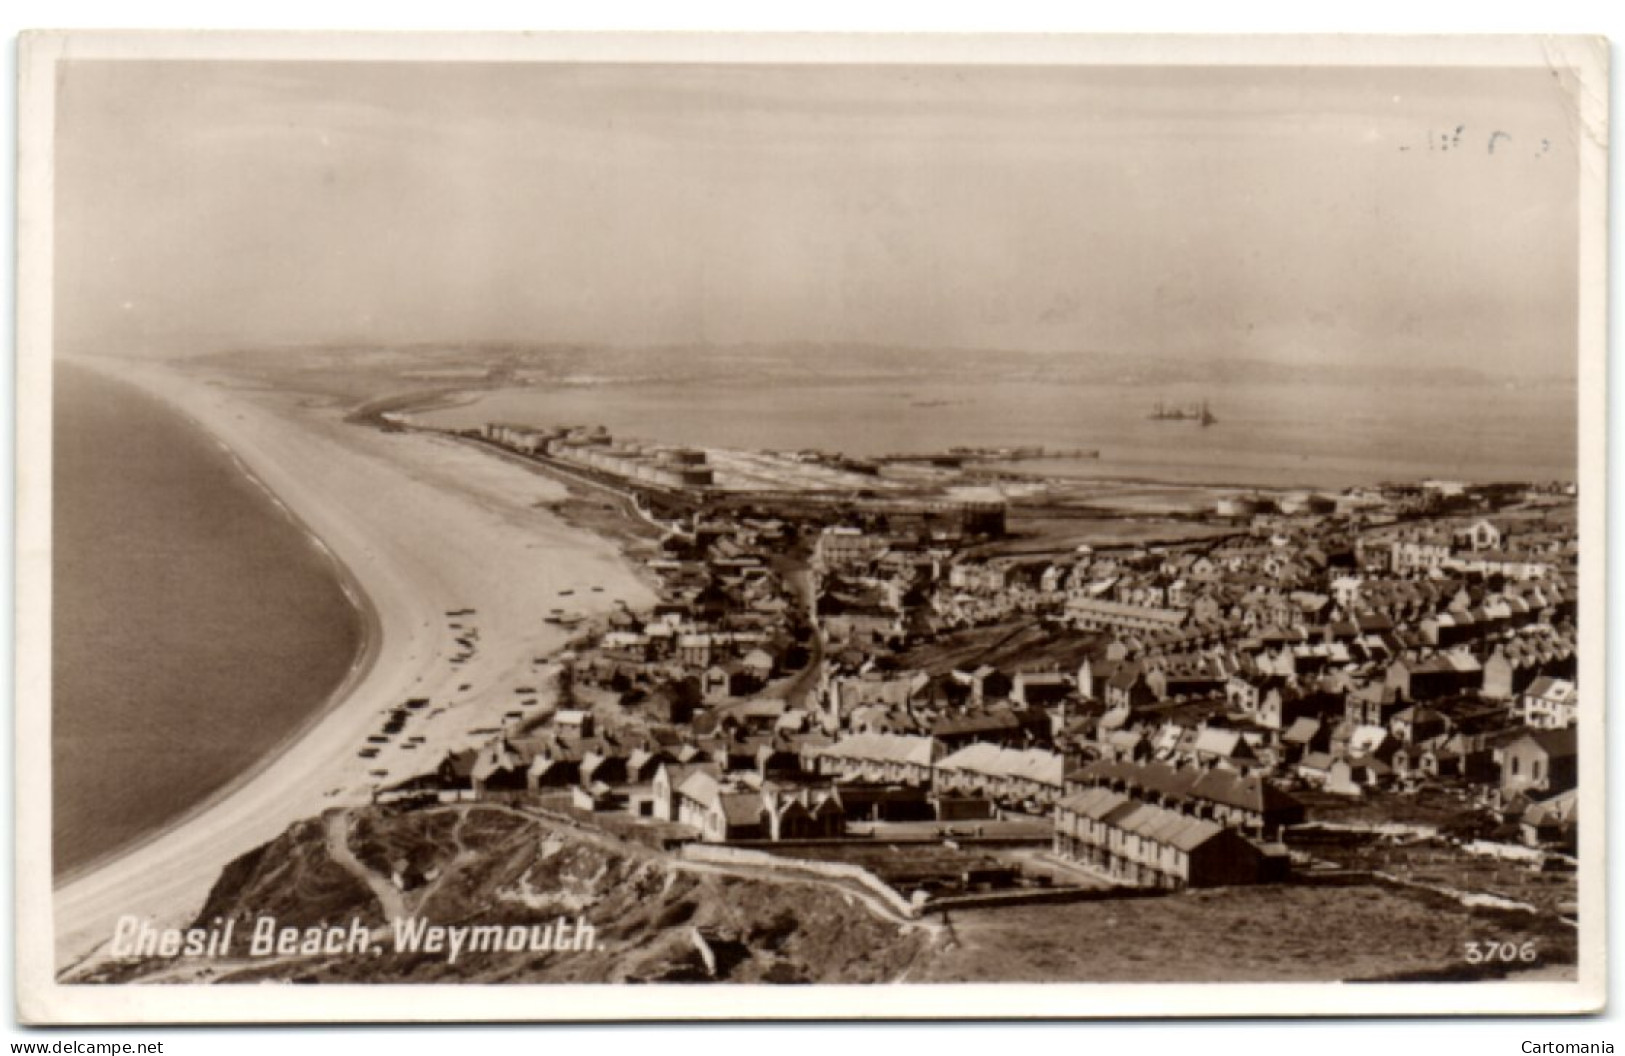 Weymouth - Chesil Beach - Weymouth